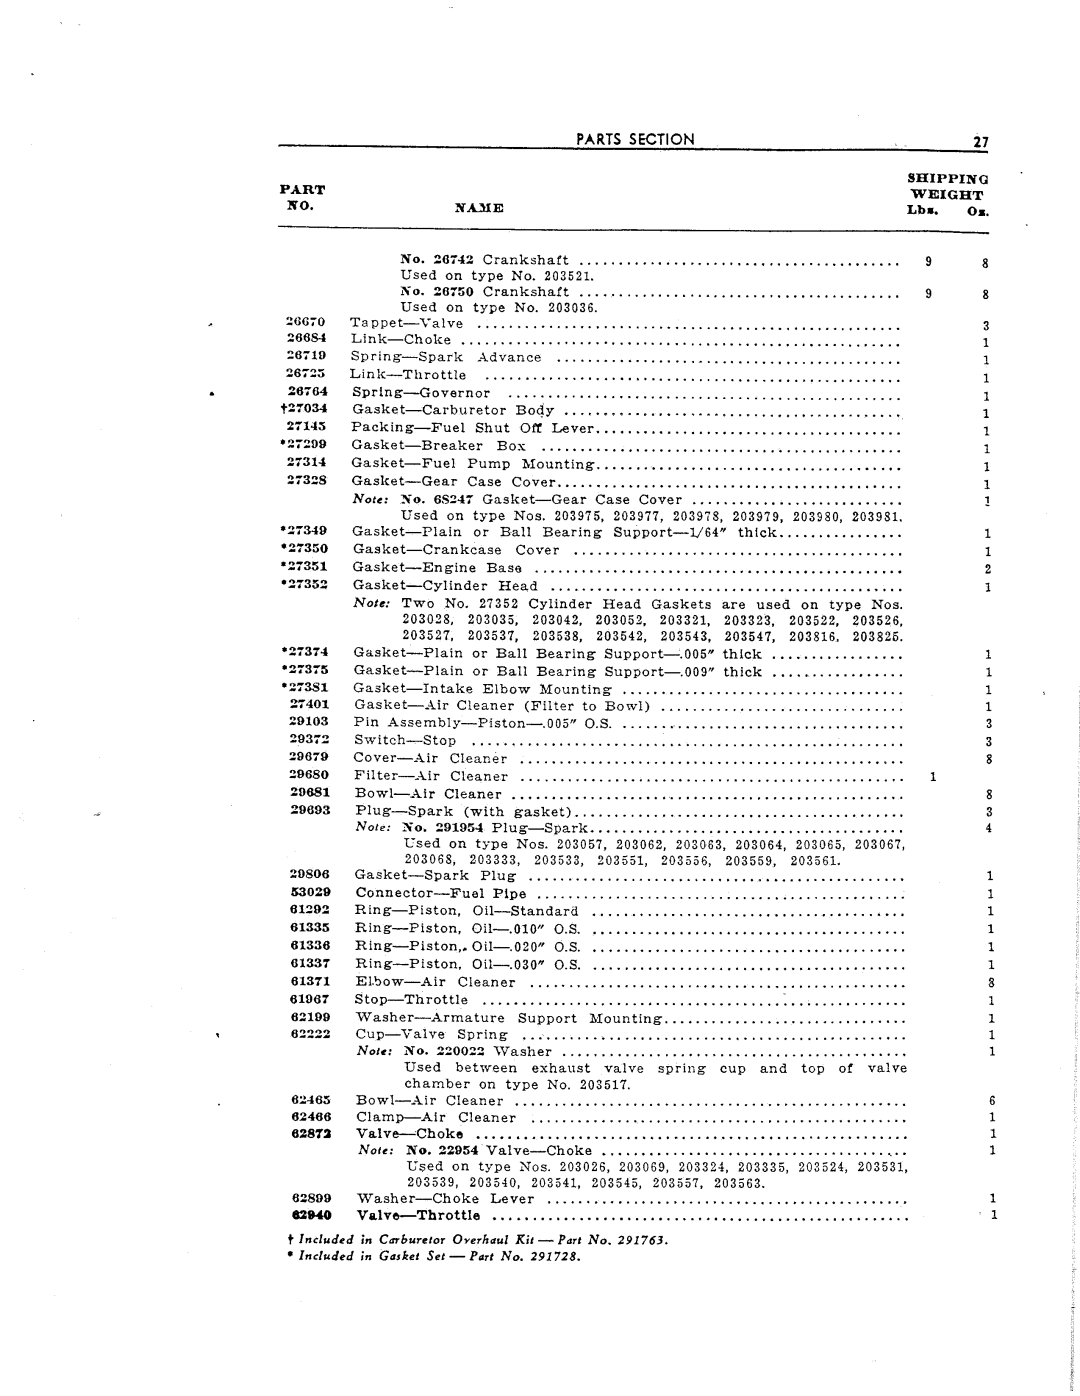 Briggs & Stratton 23R6D, 23PC, 23FBPC, 23C, 23BC manual 